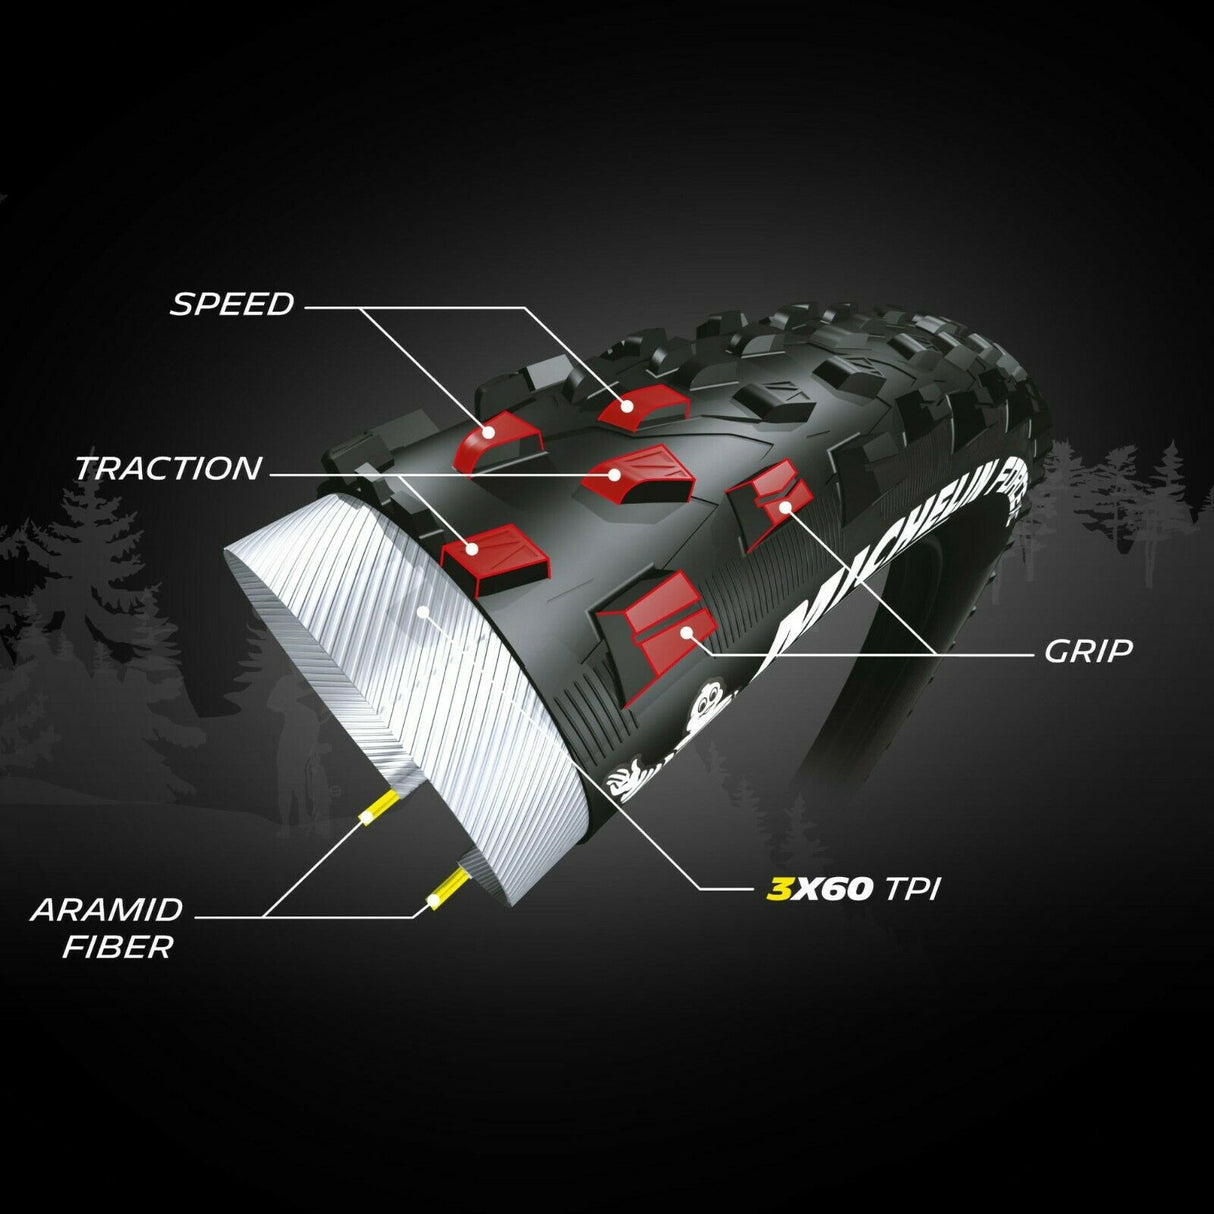 Michelin Force XC Performance Line Folding Tyre - 29” x 2.25 - Tubeless Ready - Sportandleisure.com (6968172216474)